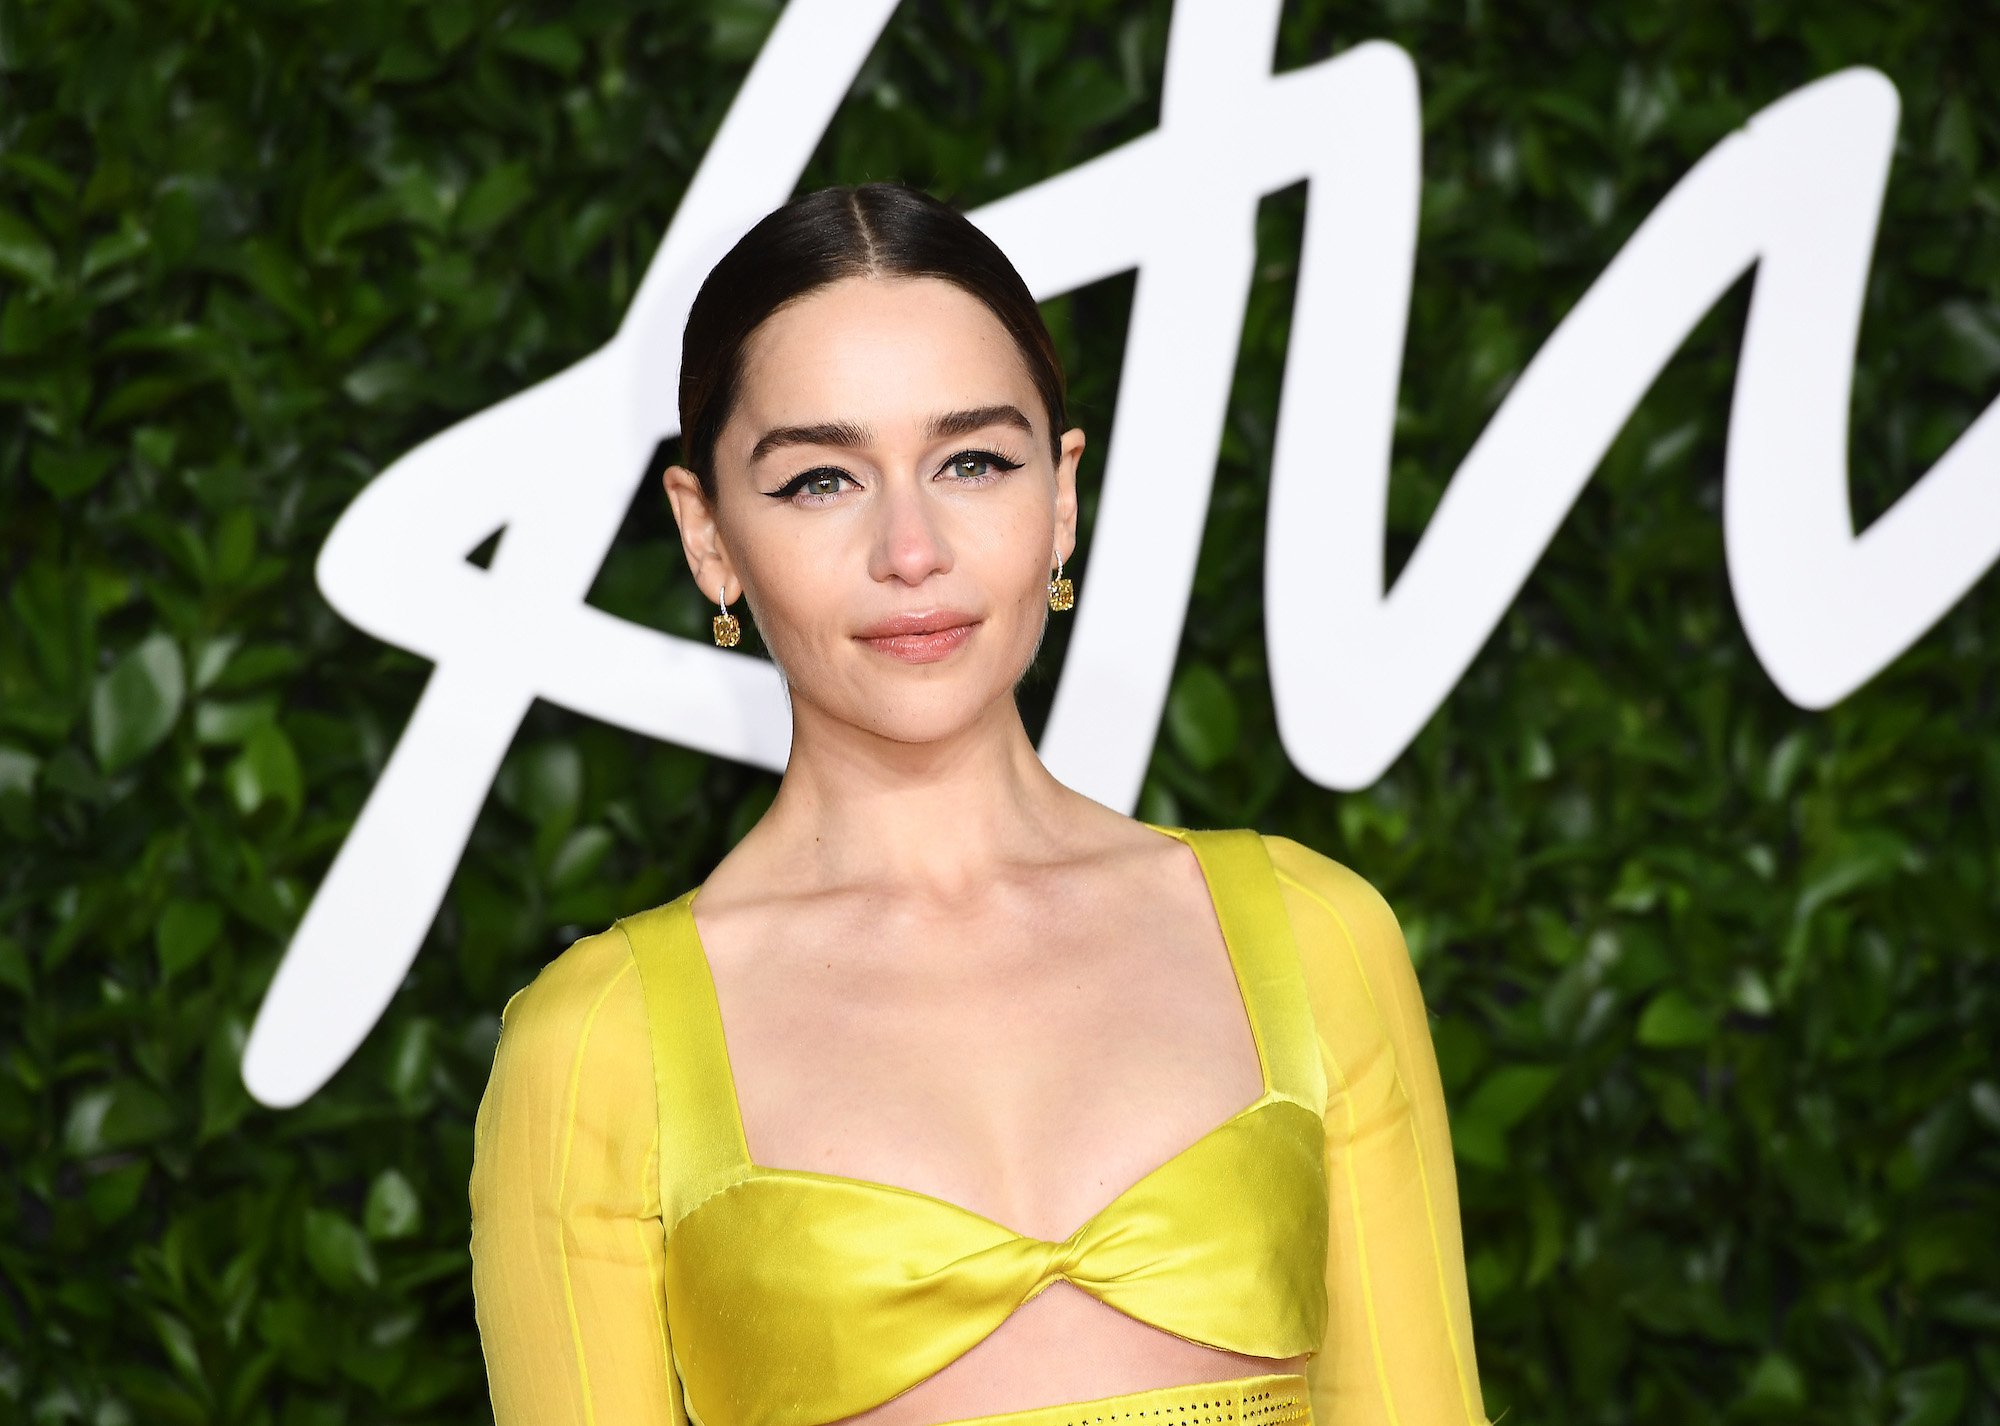 Emilia Clarke at The Fashion Awards 2019 held at Royal Albert Hall on Dec. 02, 2019.